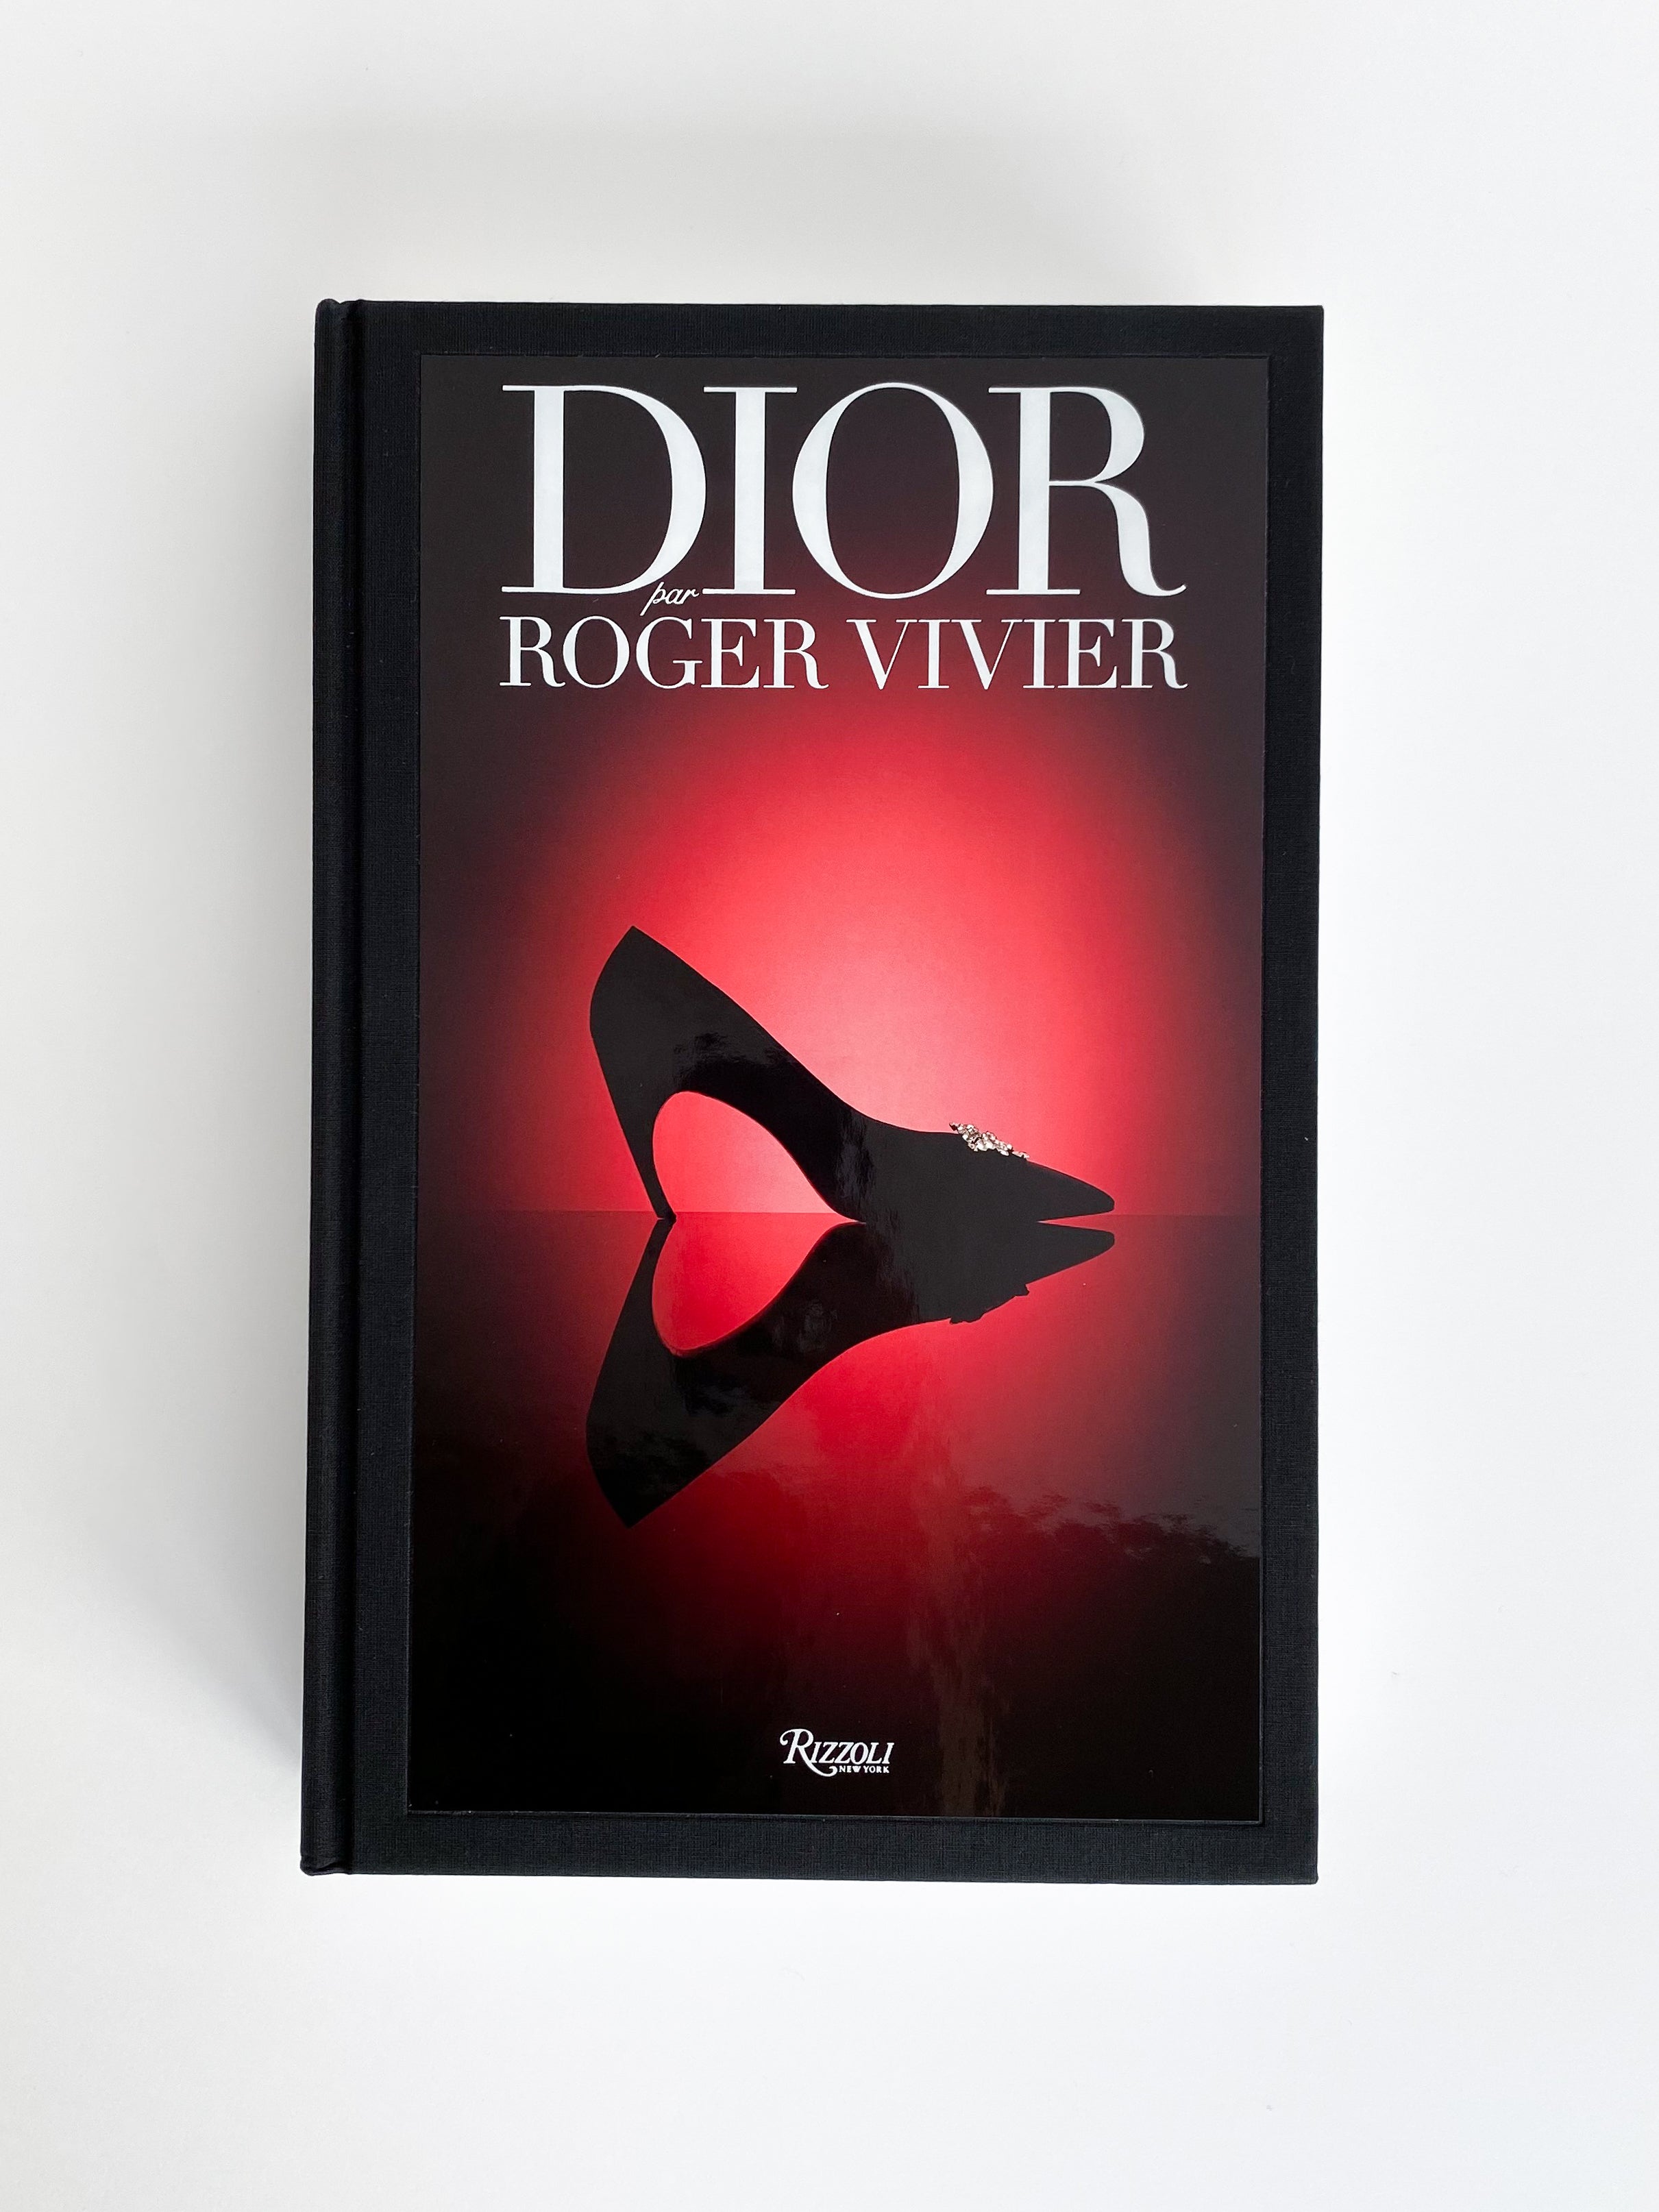 Dior par Roger Vivier, Edition Rizzoli